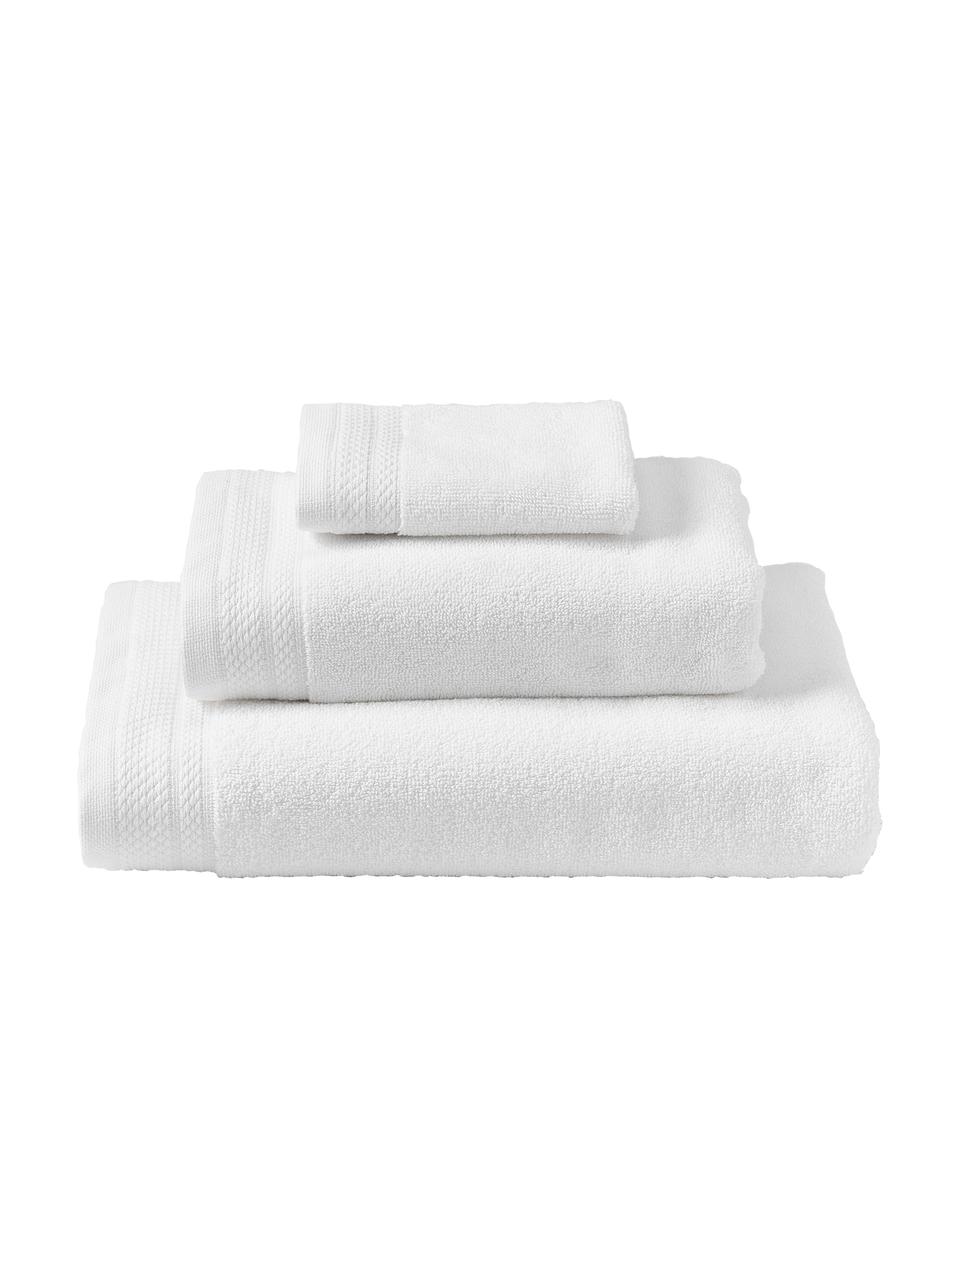 Set de toallas de algodón ecológico Premium, 3 uds., 100% algodón ecológico con certificado GOTS (por GCL International, GCL-300517)
Gramaje superior 600 g/m², Blanco, Set de diferentes tamaños